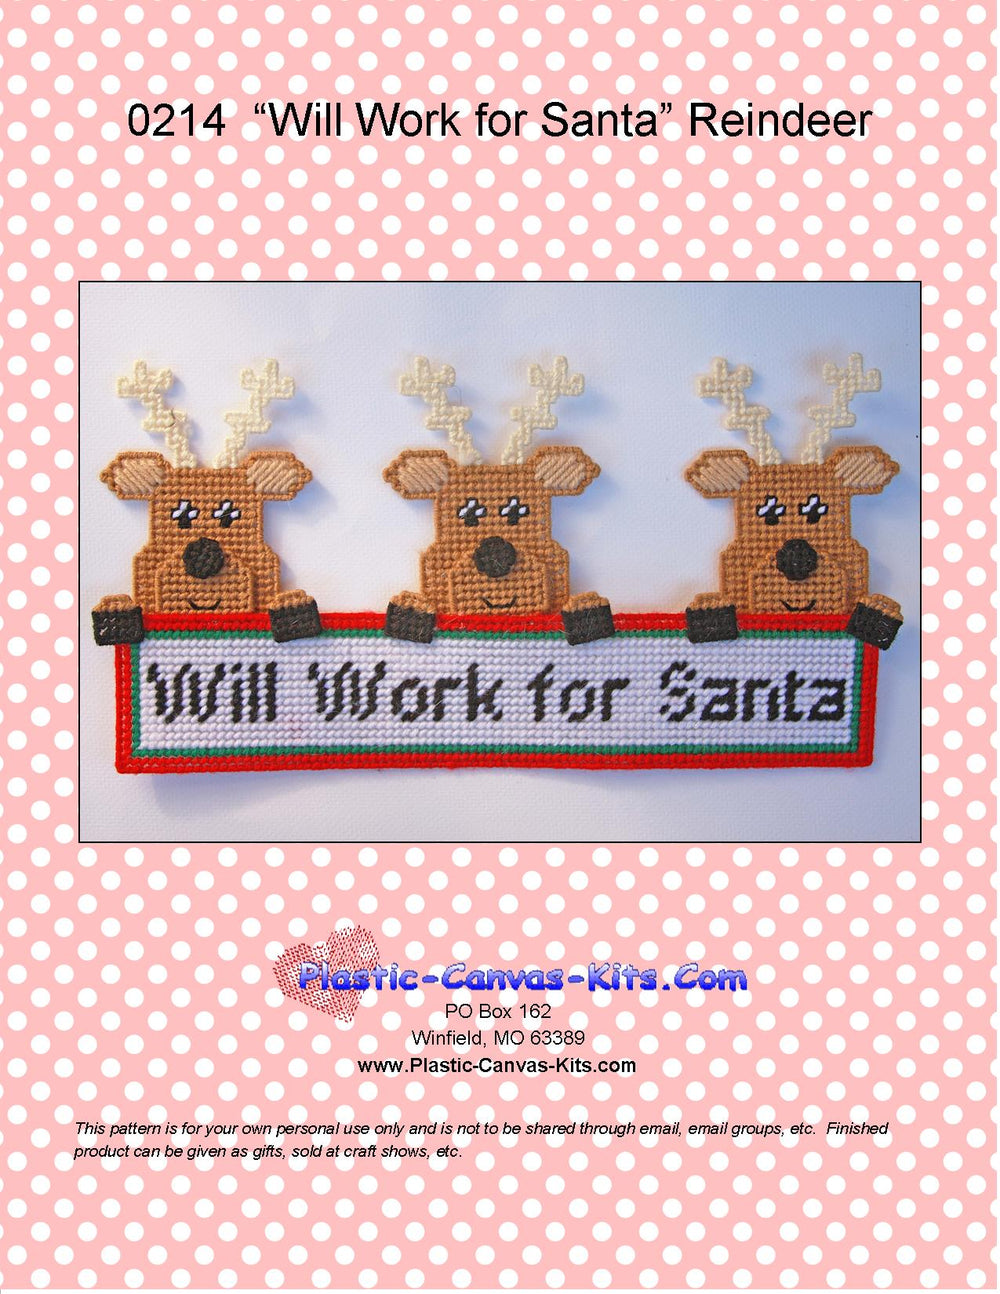 Will Work for Santa Reindeer